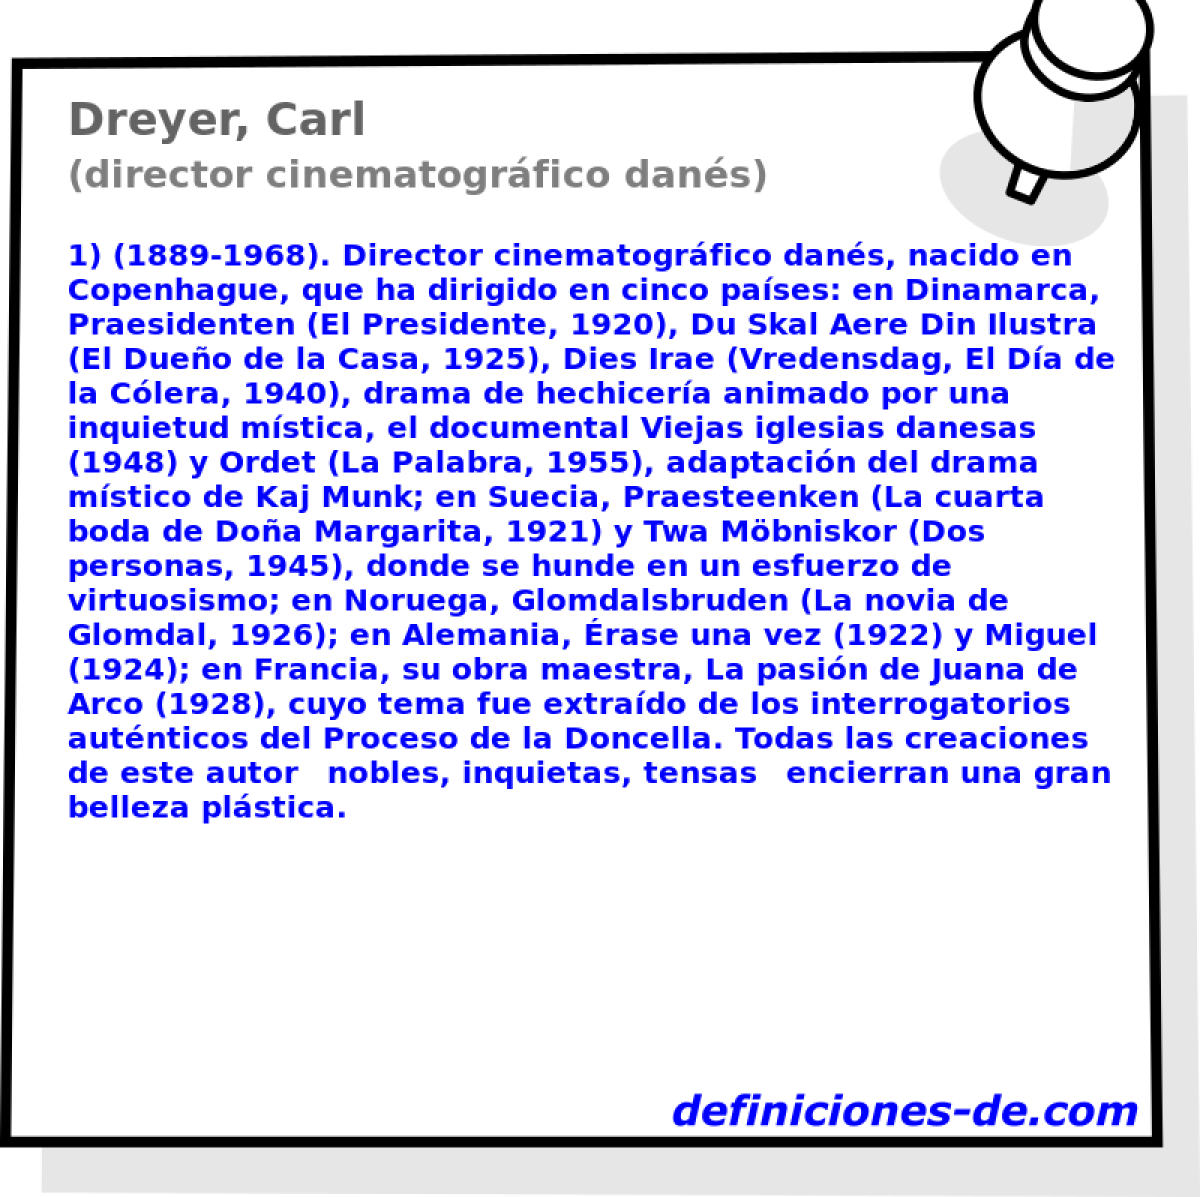 Dreyer, Carl (director cinematogrfico dans)